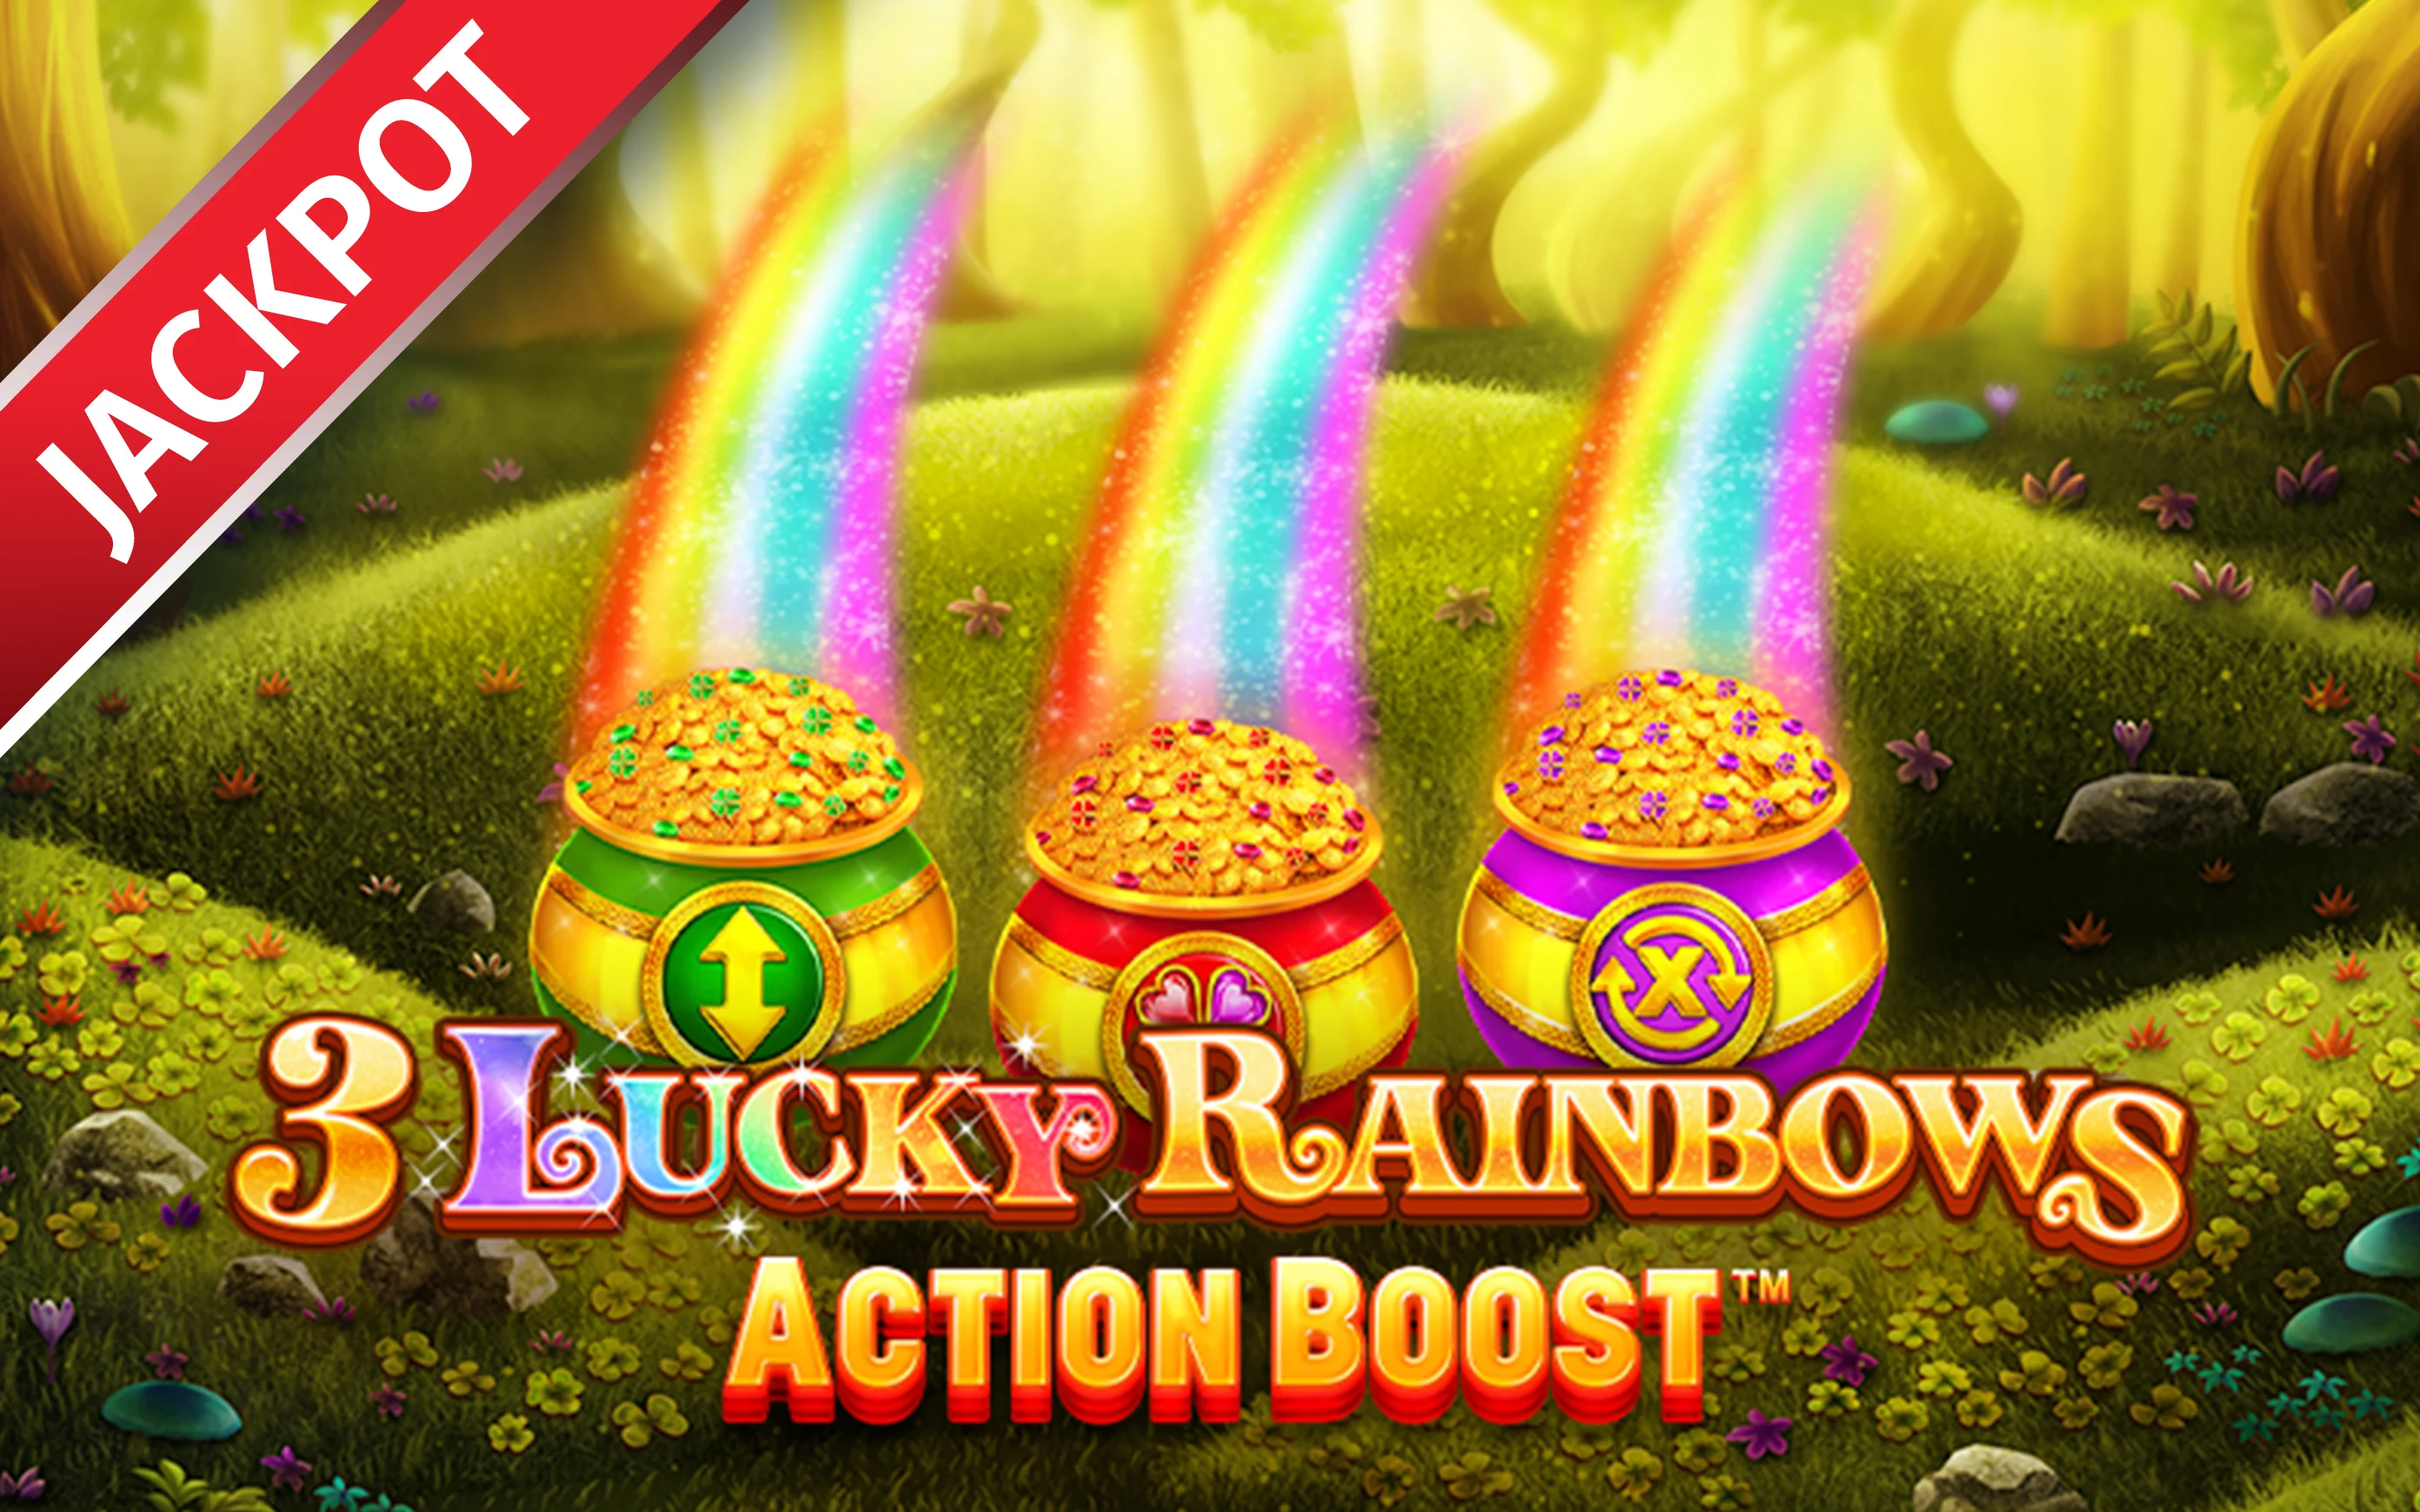 Играйте Action Boost ™ 3 Lucky Rainbows на Starcasino.be онлайн казино